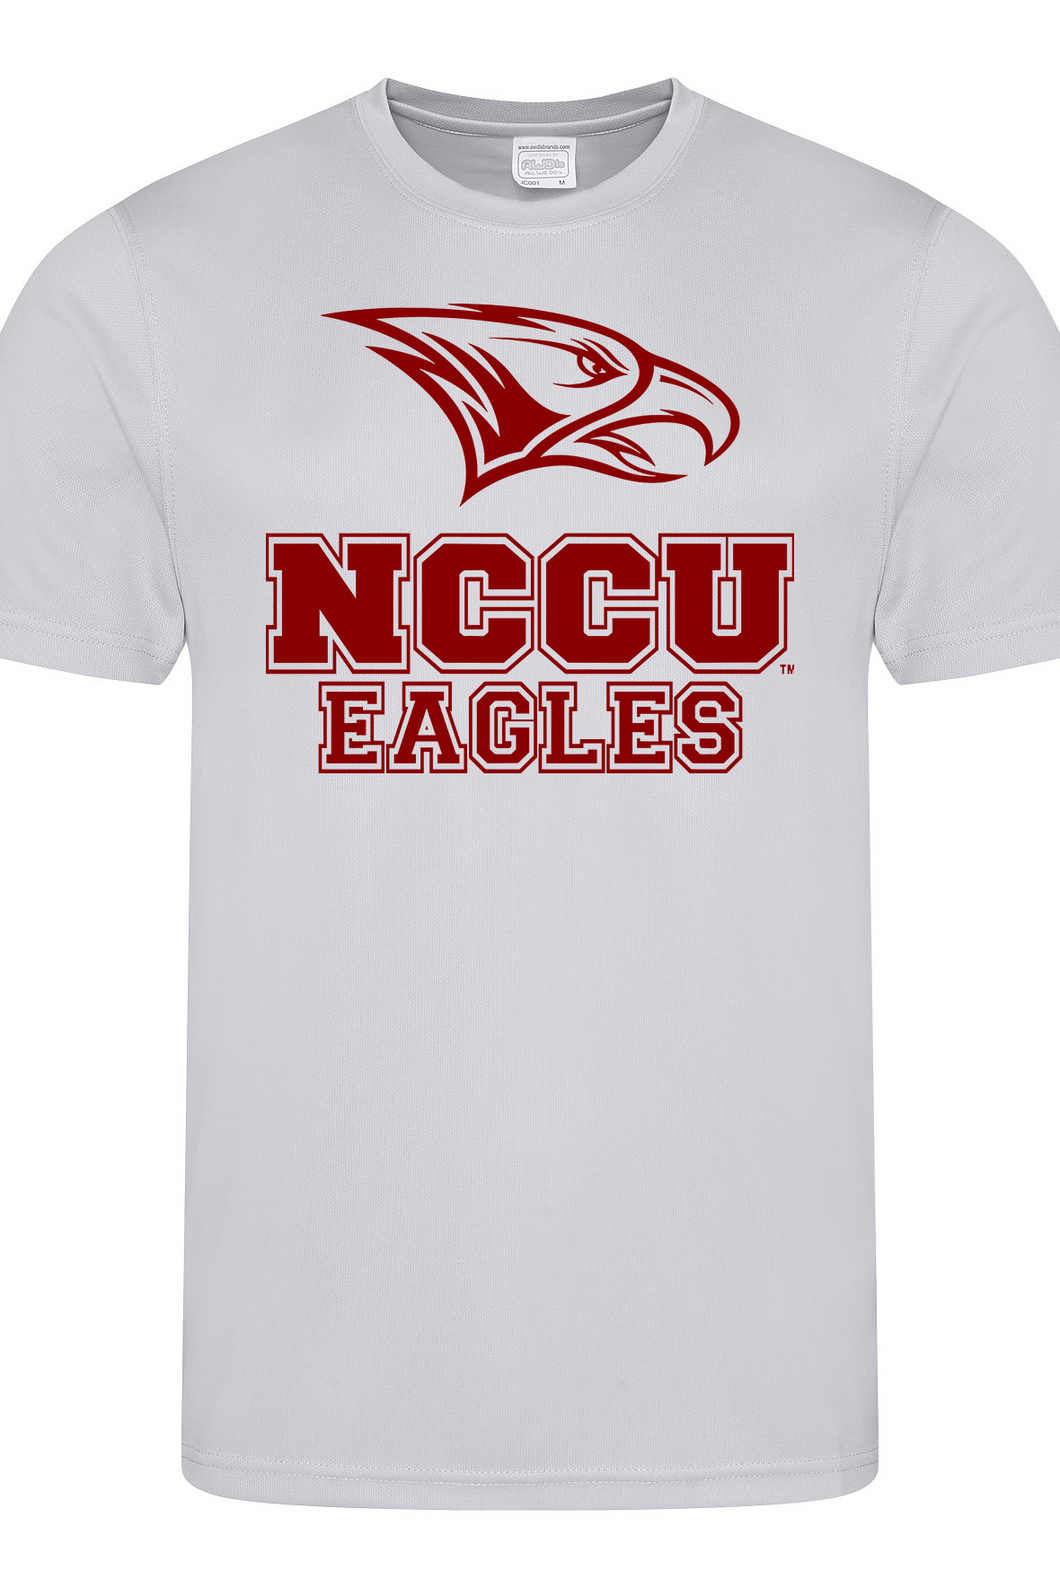 NCCU Short Sleeve Dry Fit Eagle T-Shirt